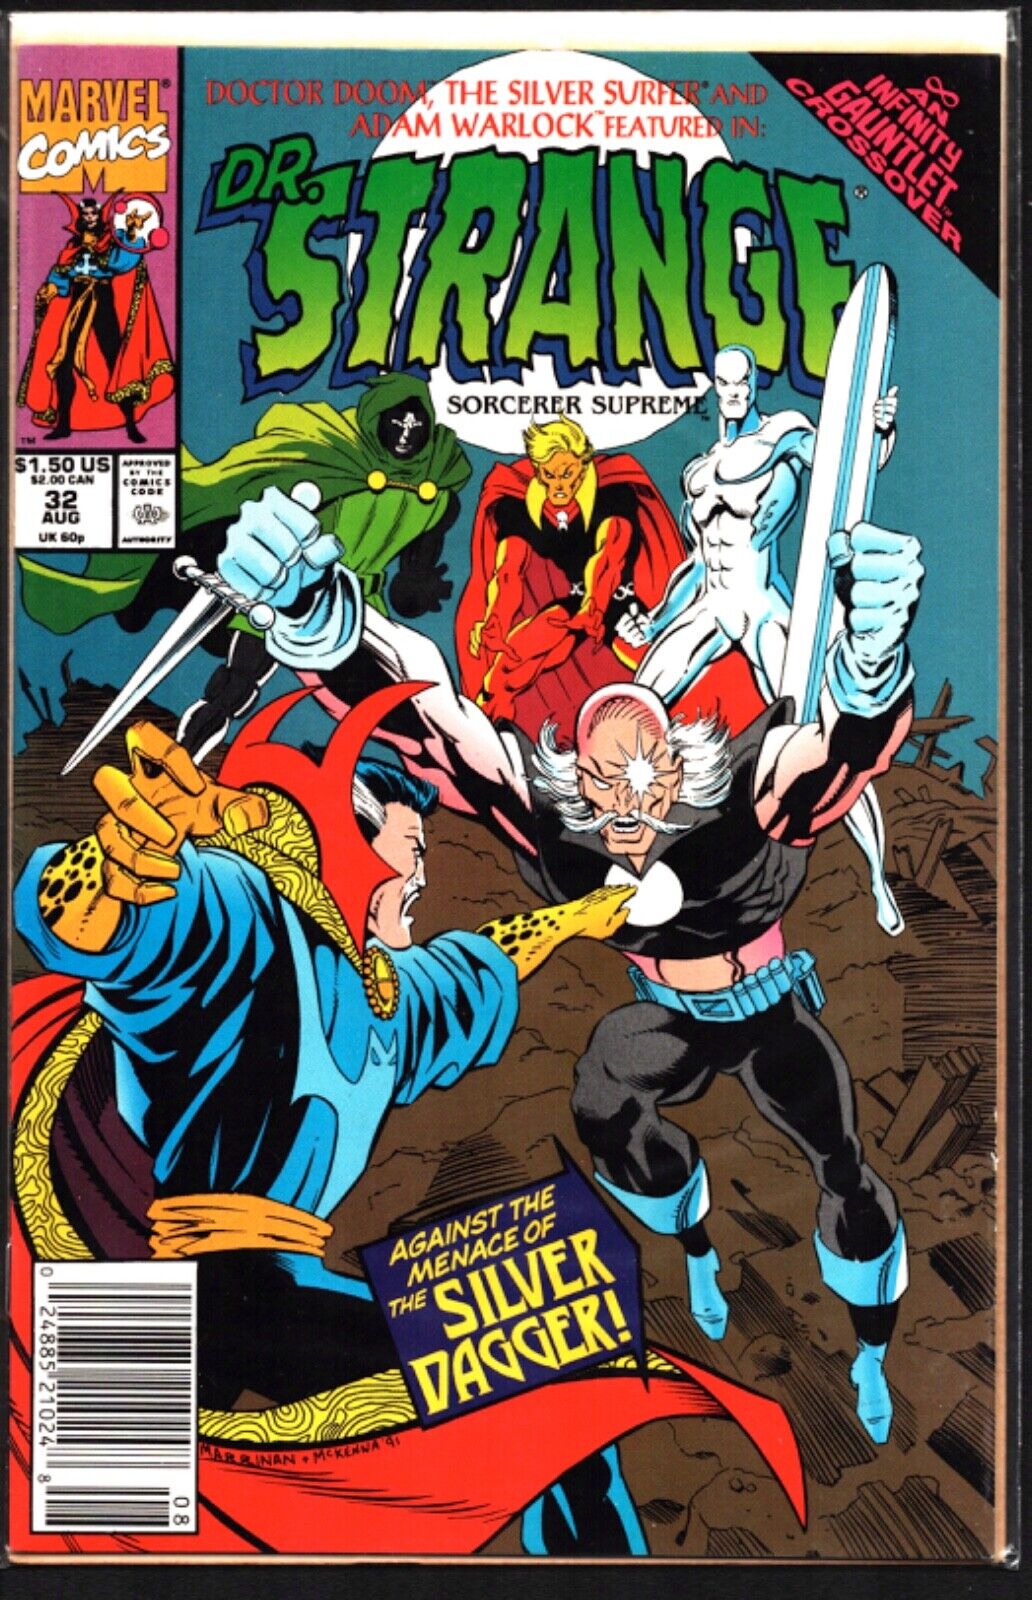 Marvel Comics-Dr. Strange #32 comic book